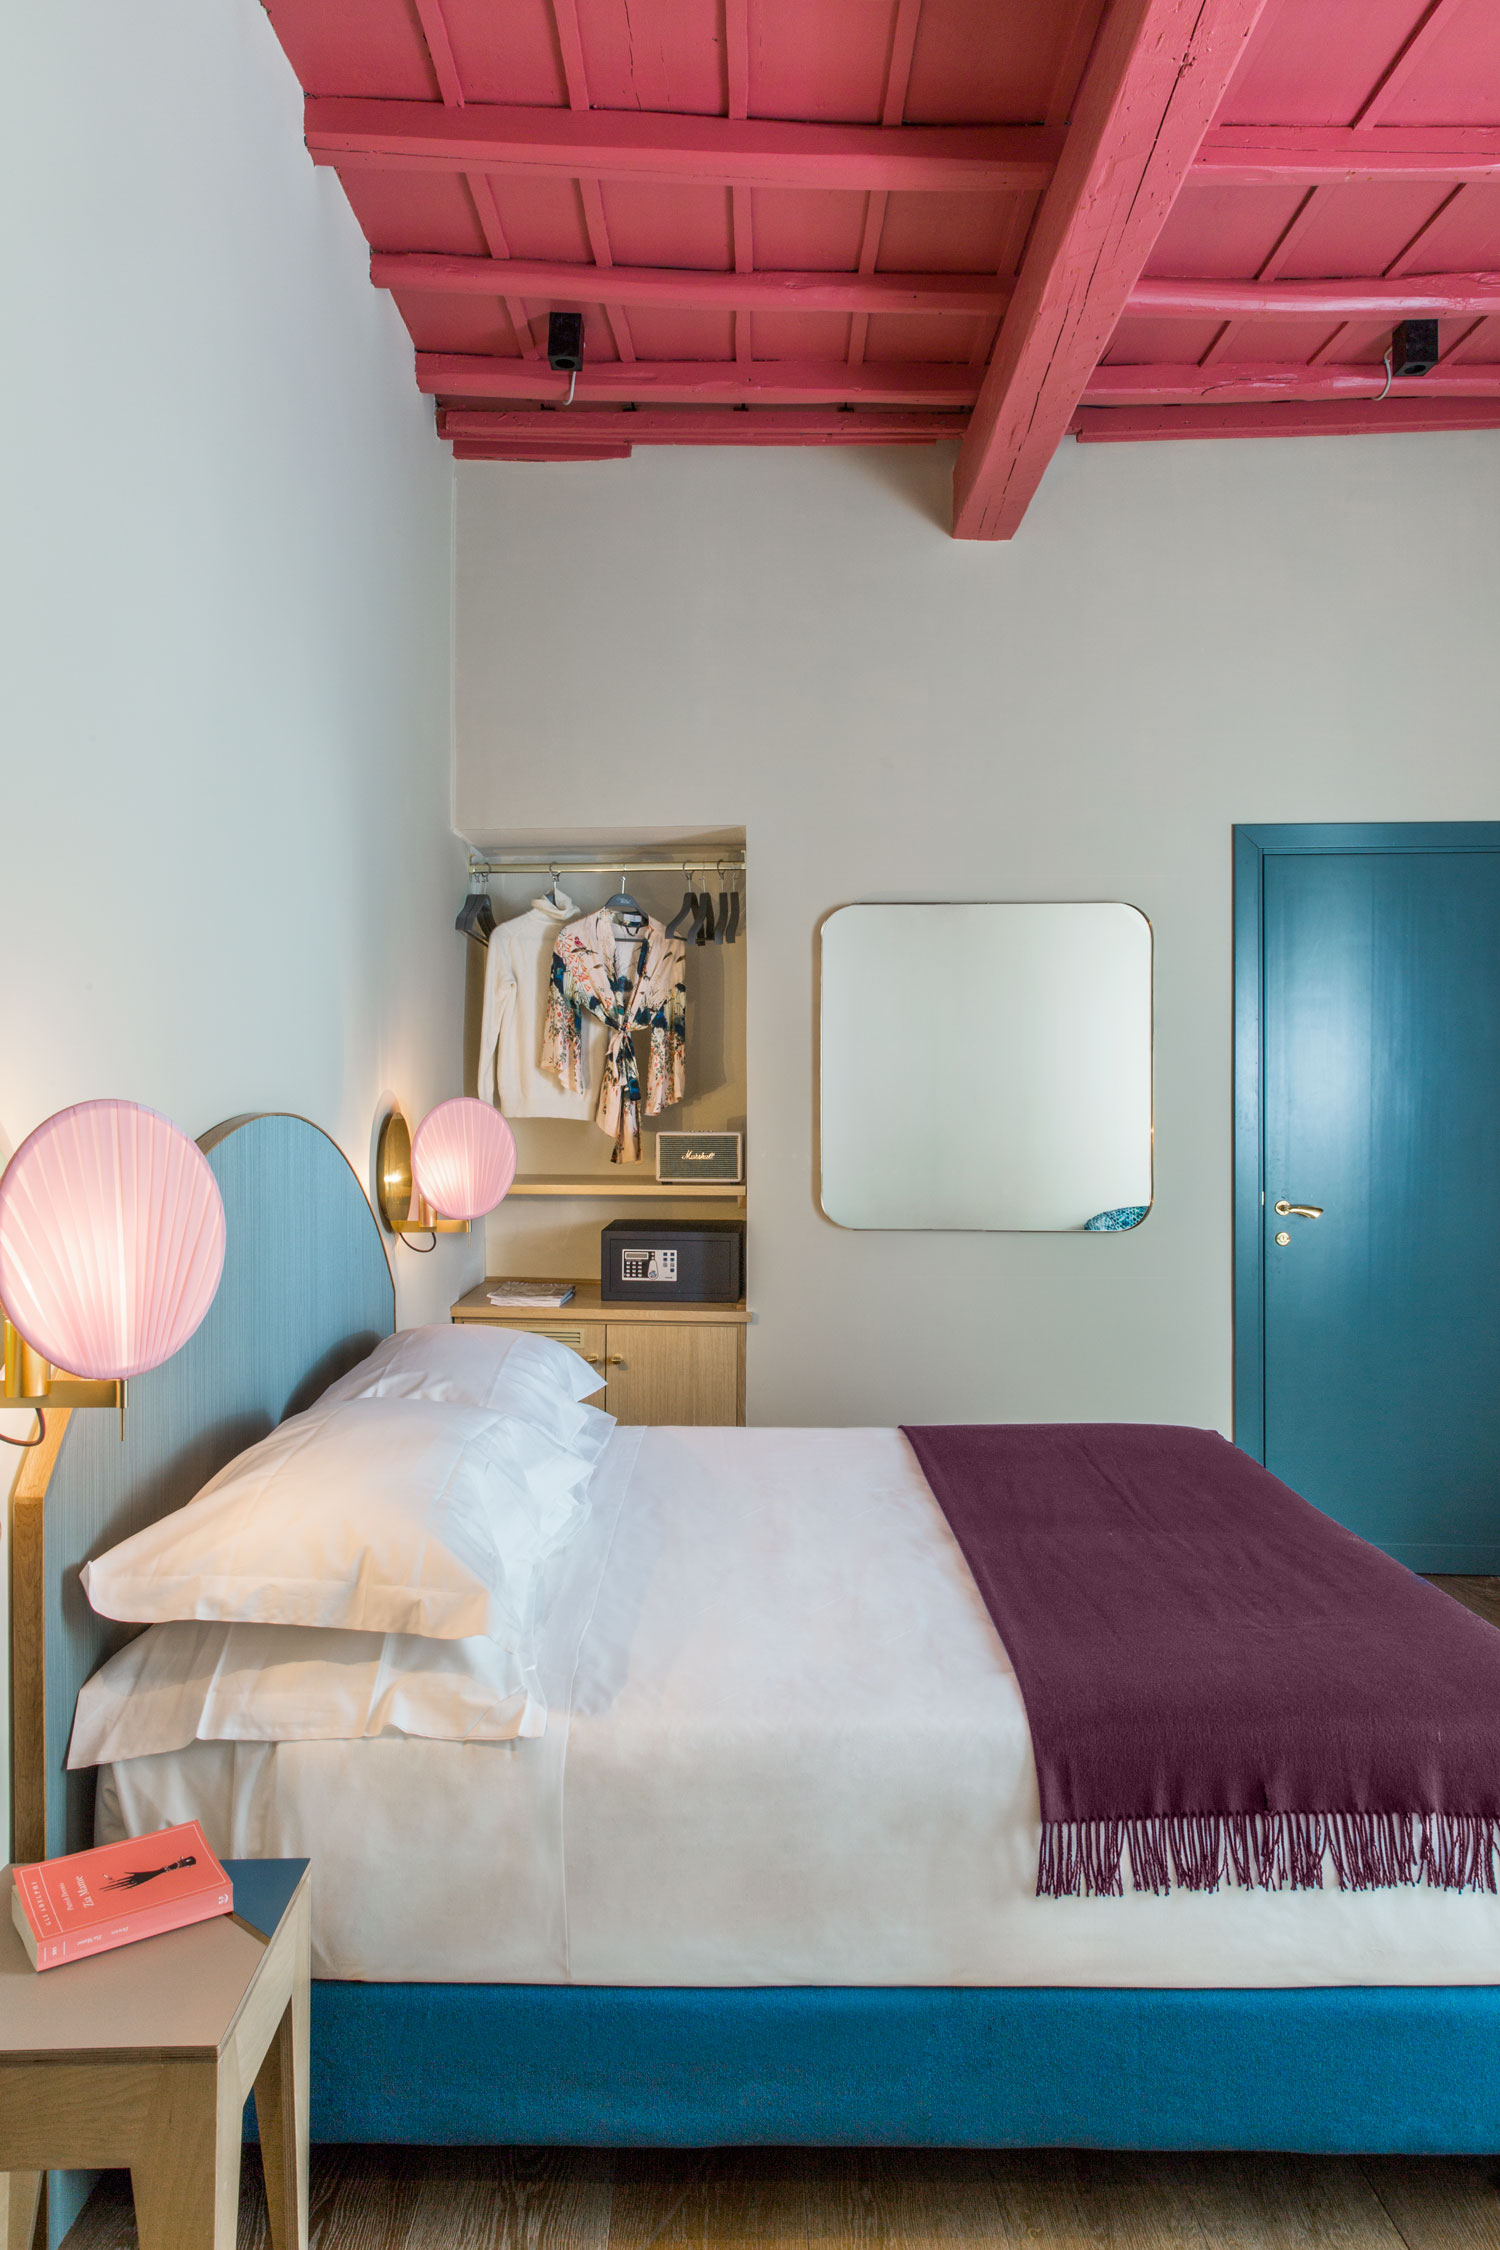 Redefining Hospitality Design With This Vibrant Hotel In Rome - WWW.AUTHENTICINTERIOR.COM design studio & blog